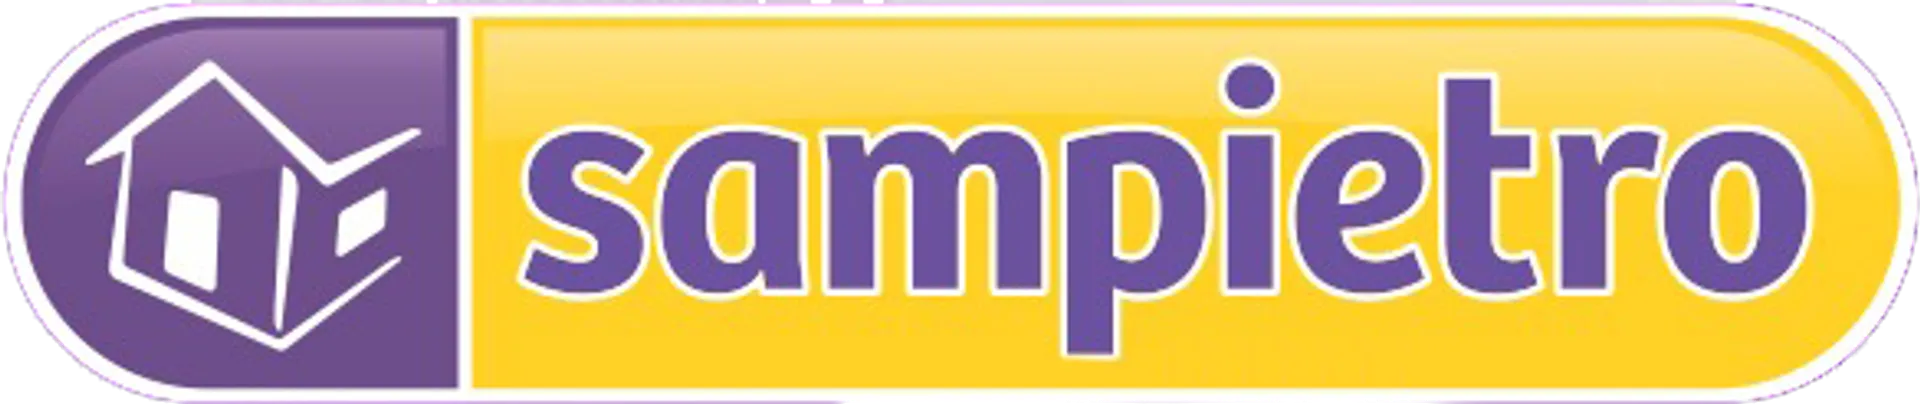 SAMPIETRO logo